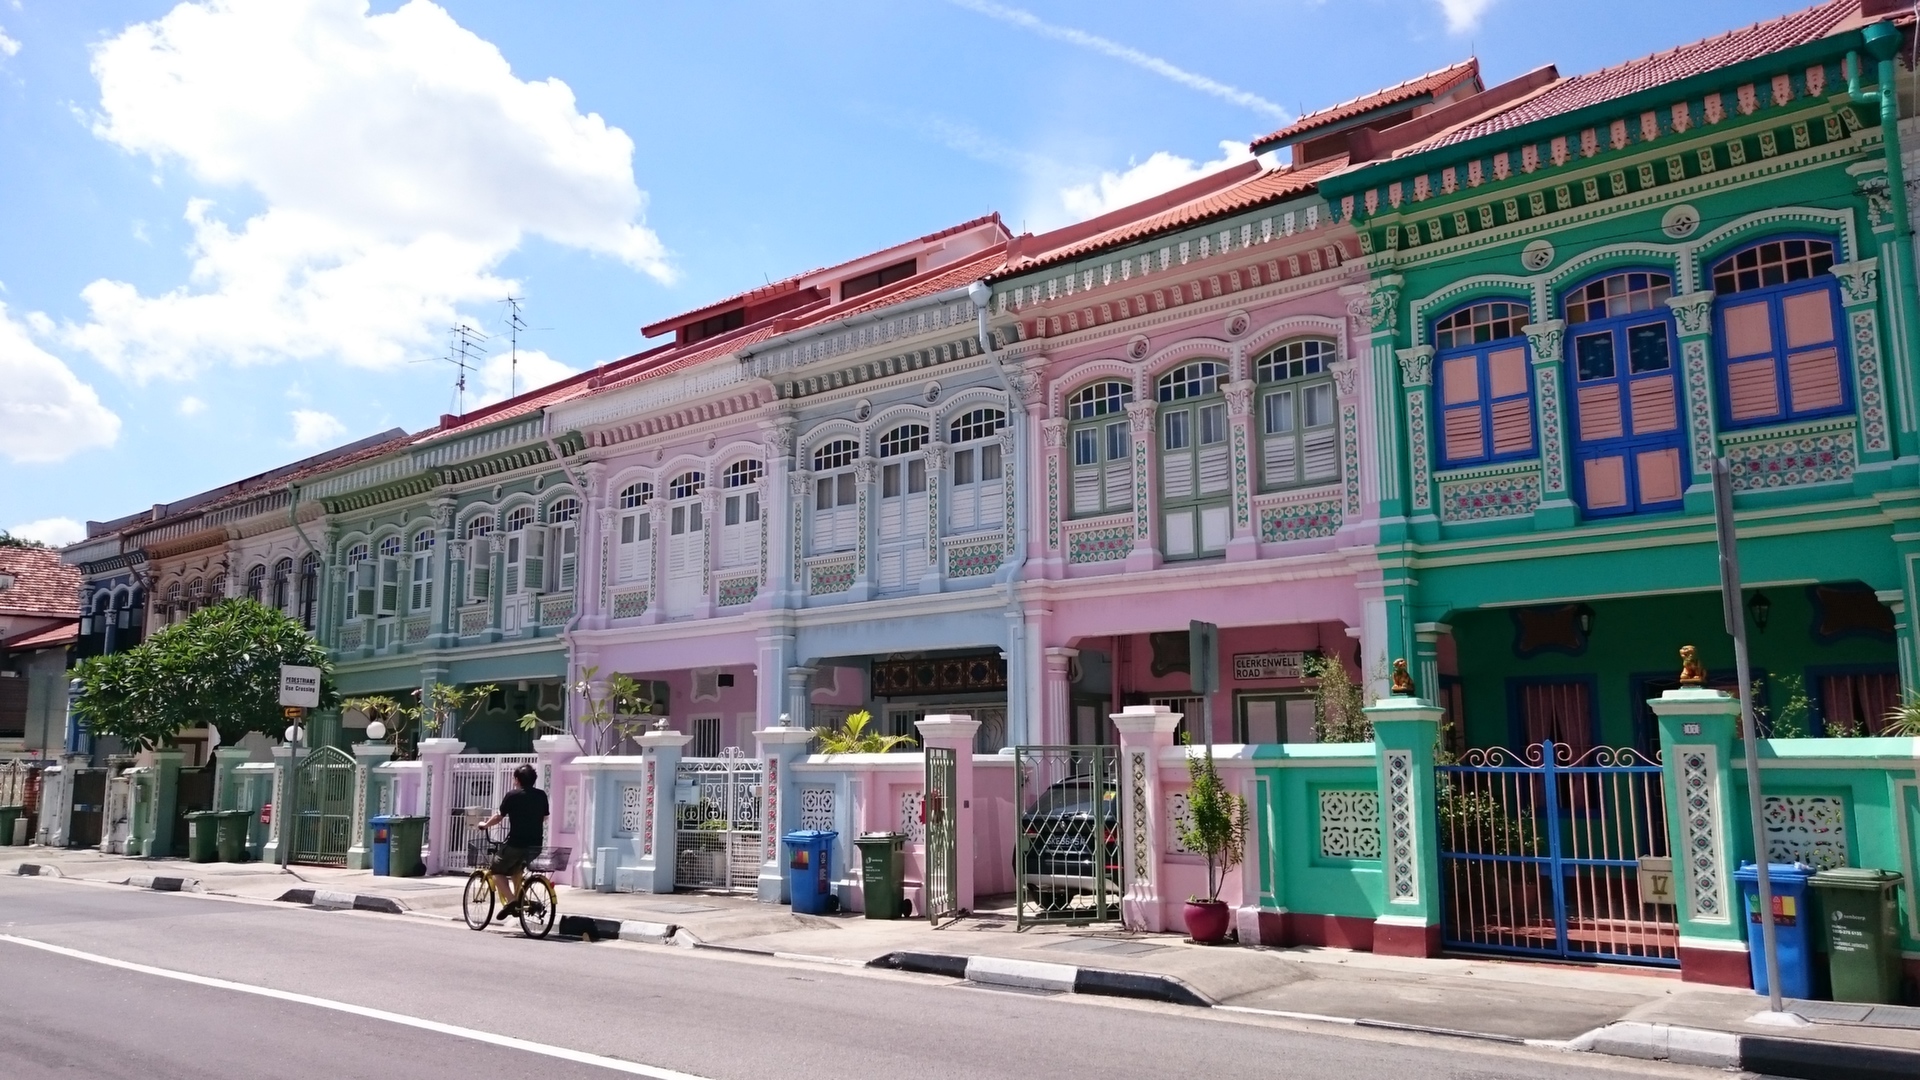 The Peranakan style houses in Joo Chiat